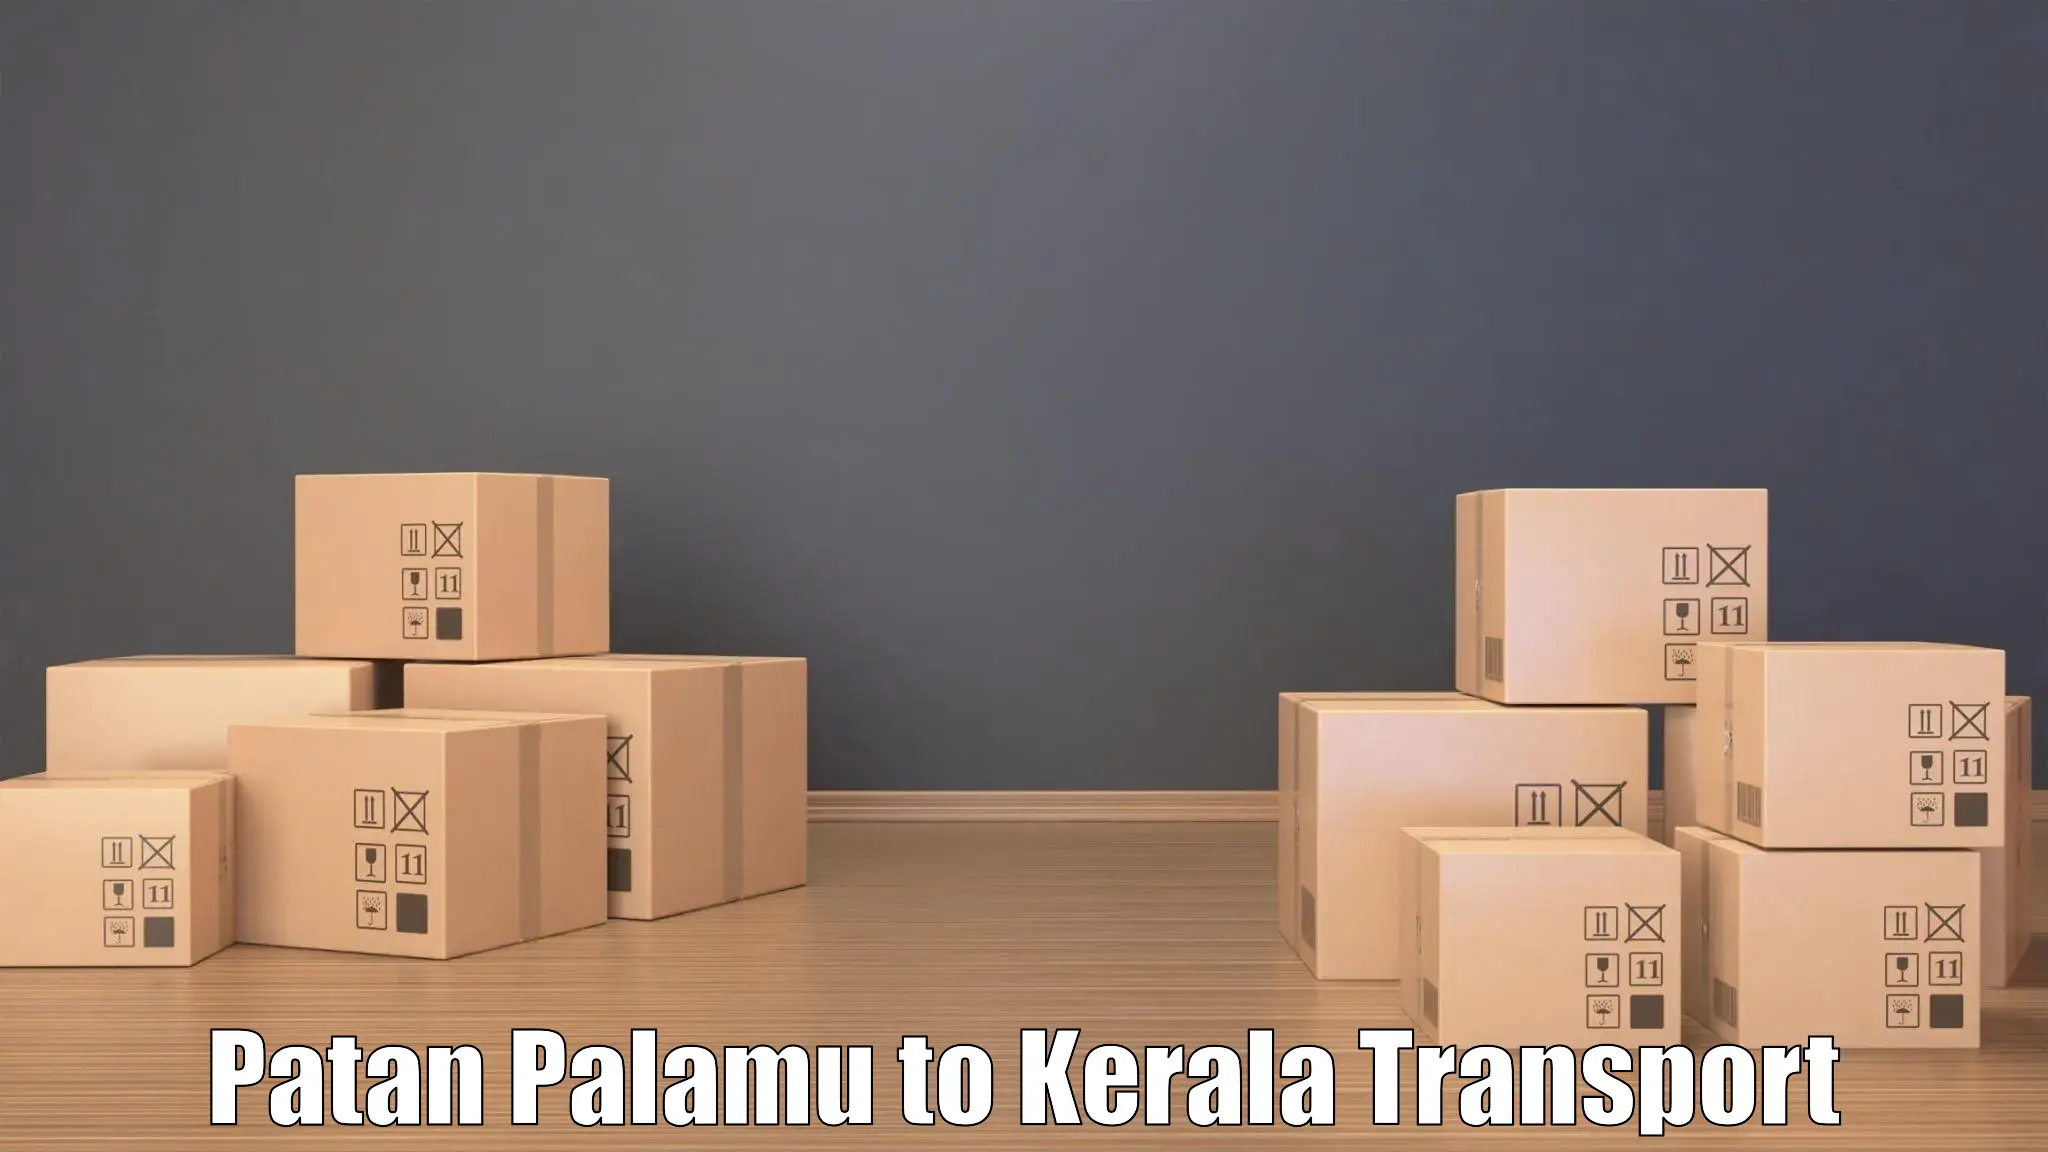 Two wheeler parcel service Patan Palamu to Kattappana